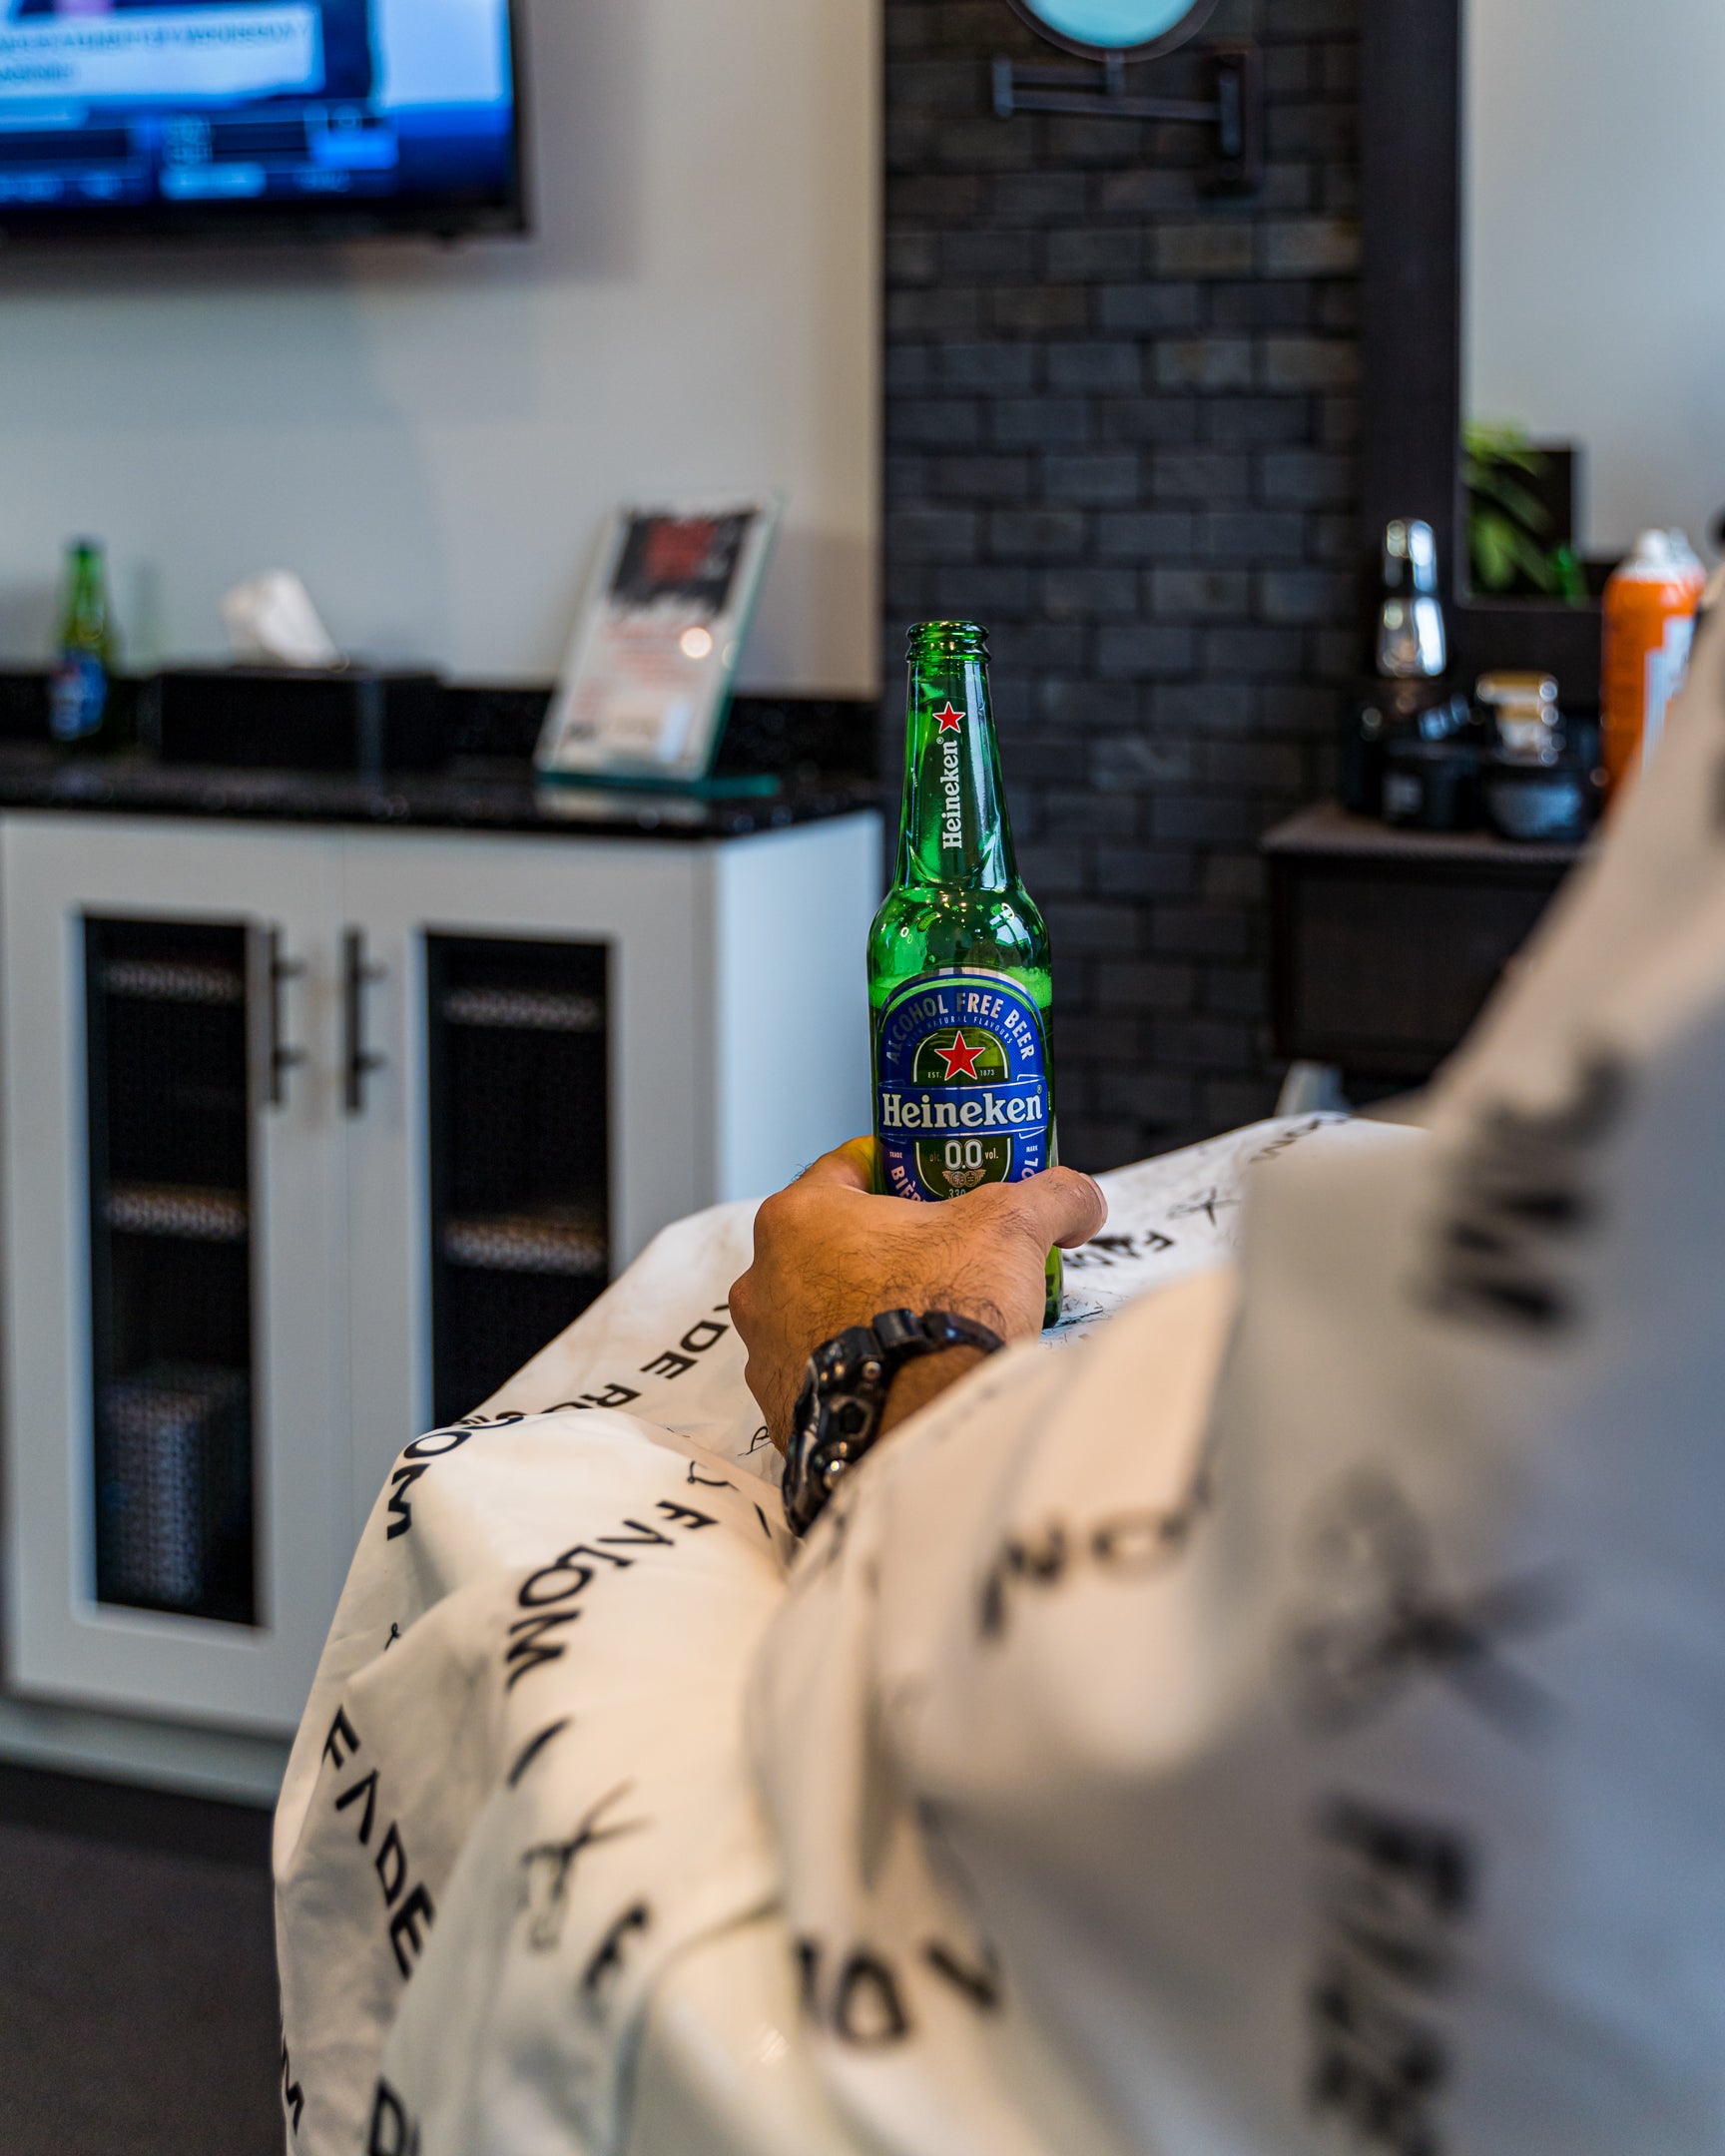 Heineken sponsors Fade Room Toronto's favorite barbershop